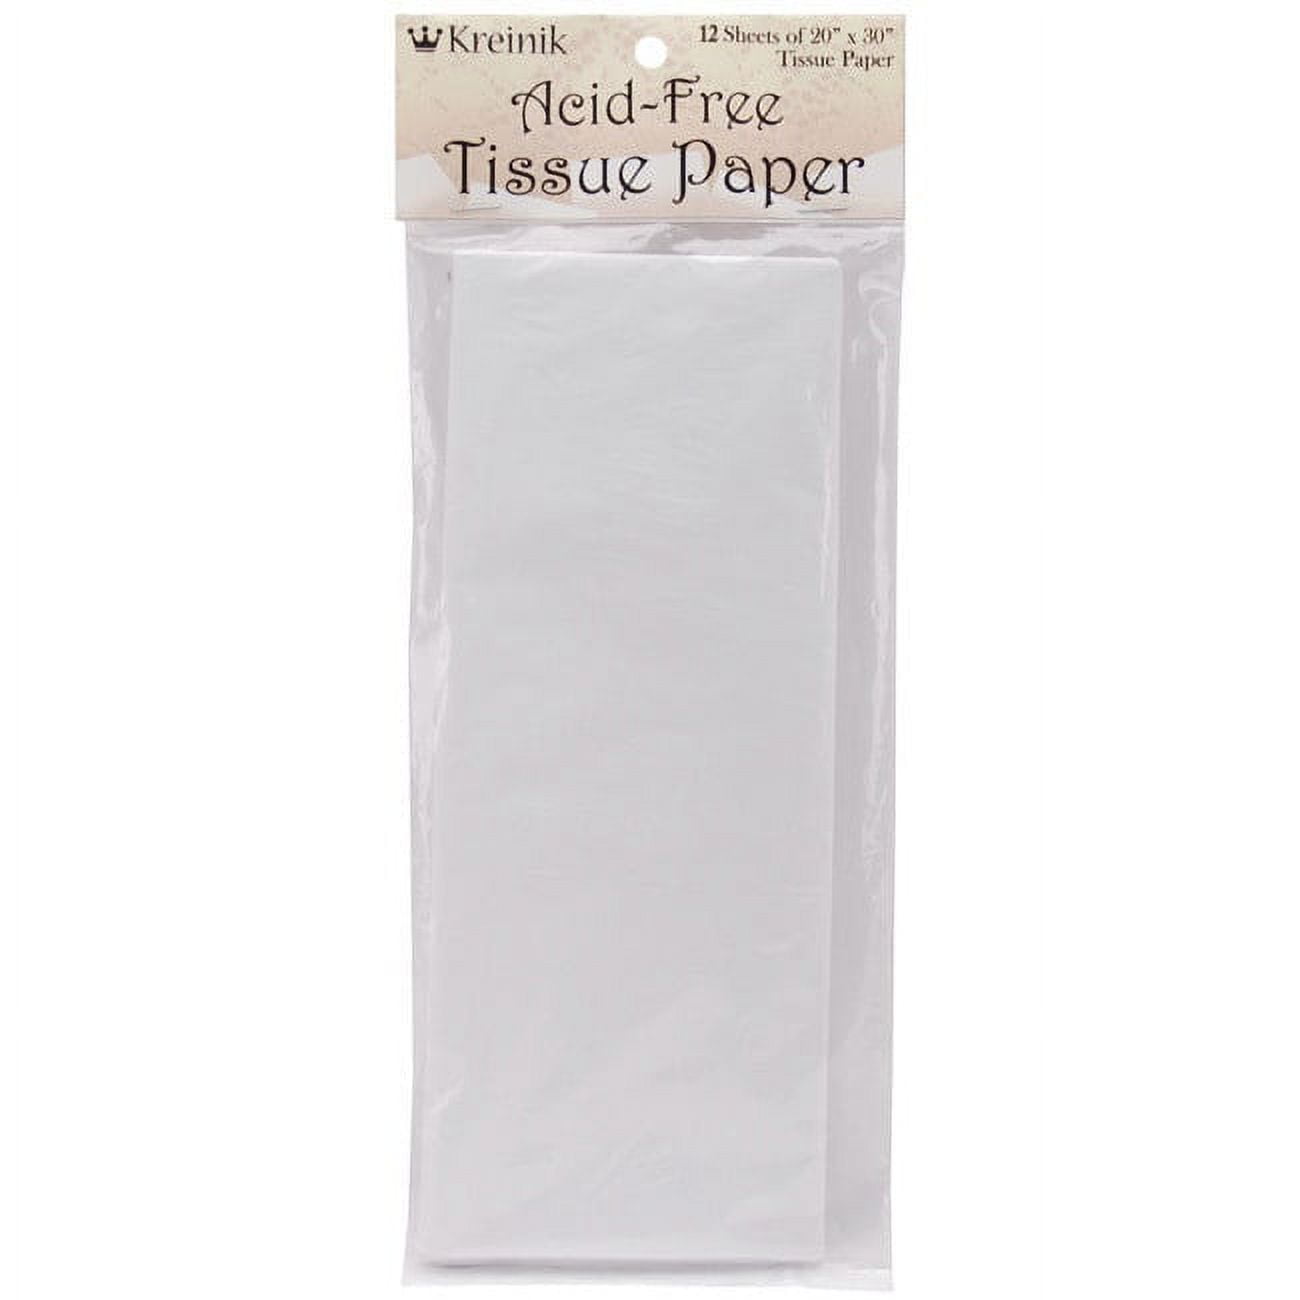 Acid-Free Tissue Paper Sheets - 24 x 36 S-23031 - Uline